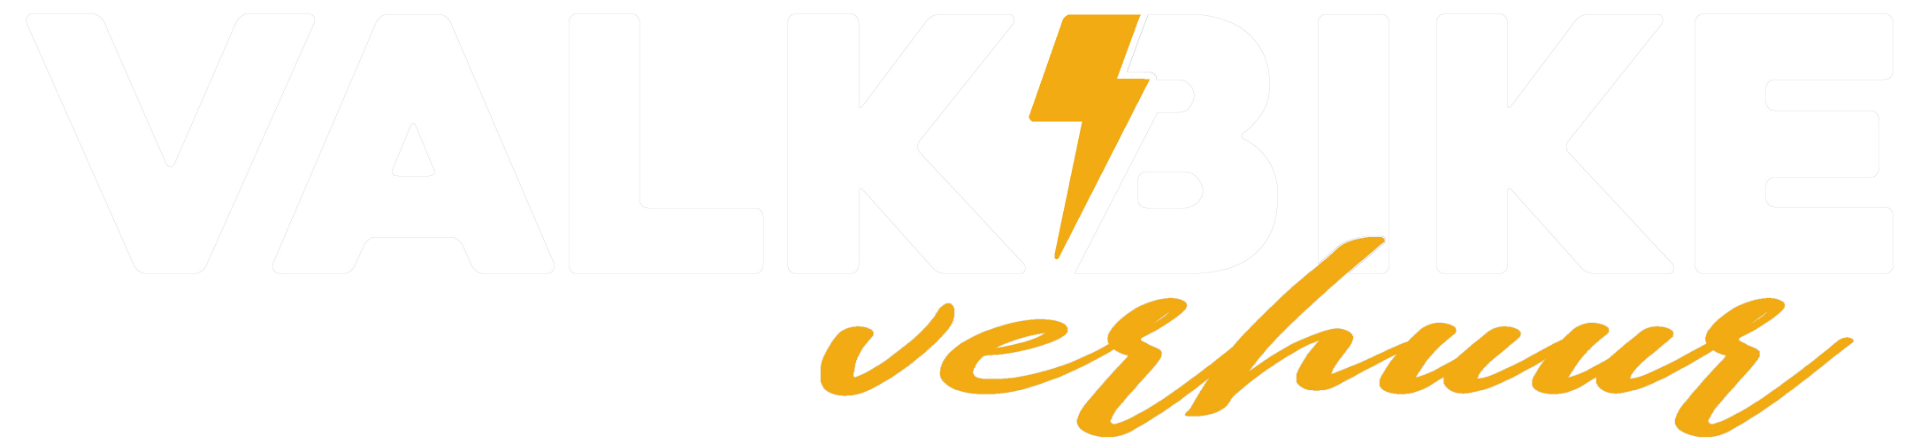 valkbike-logo.png